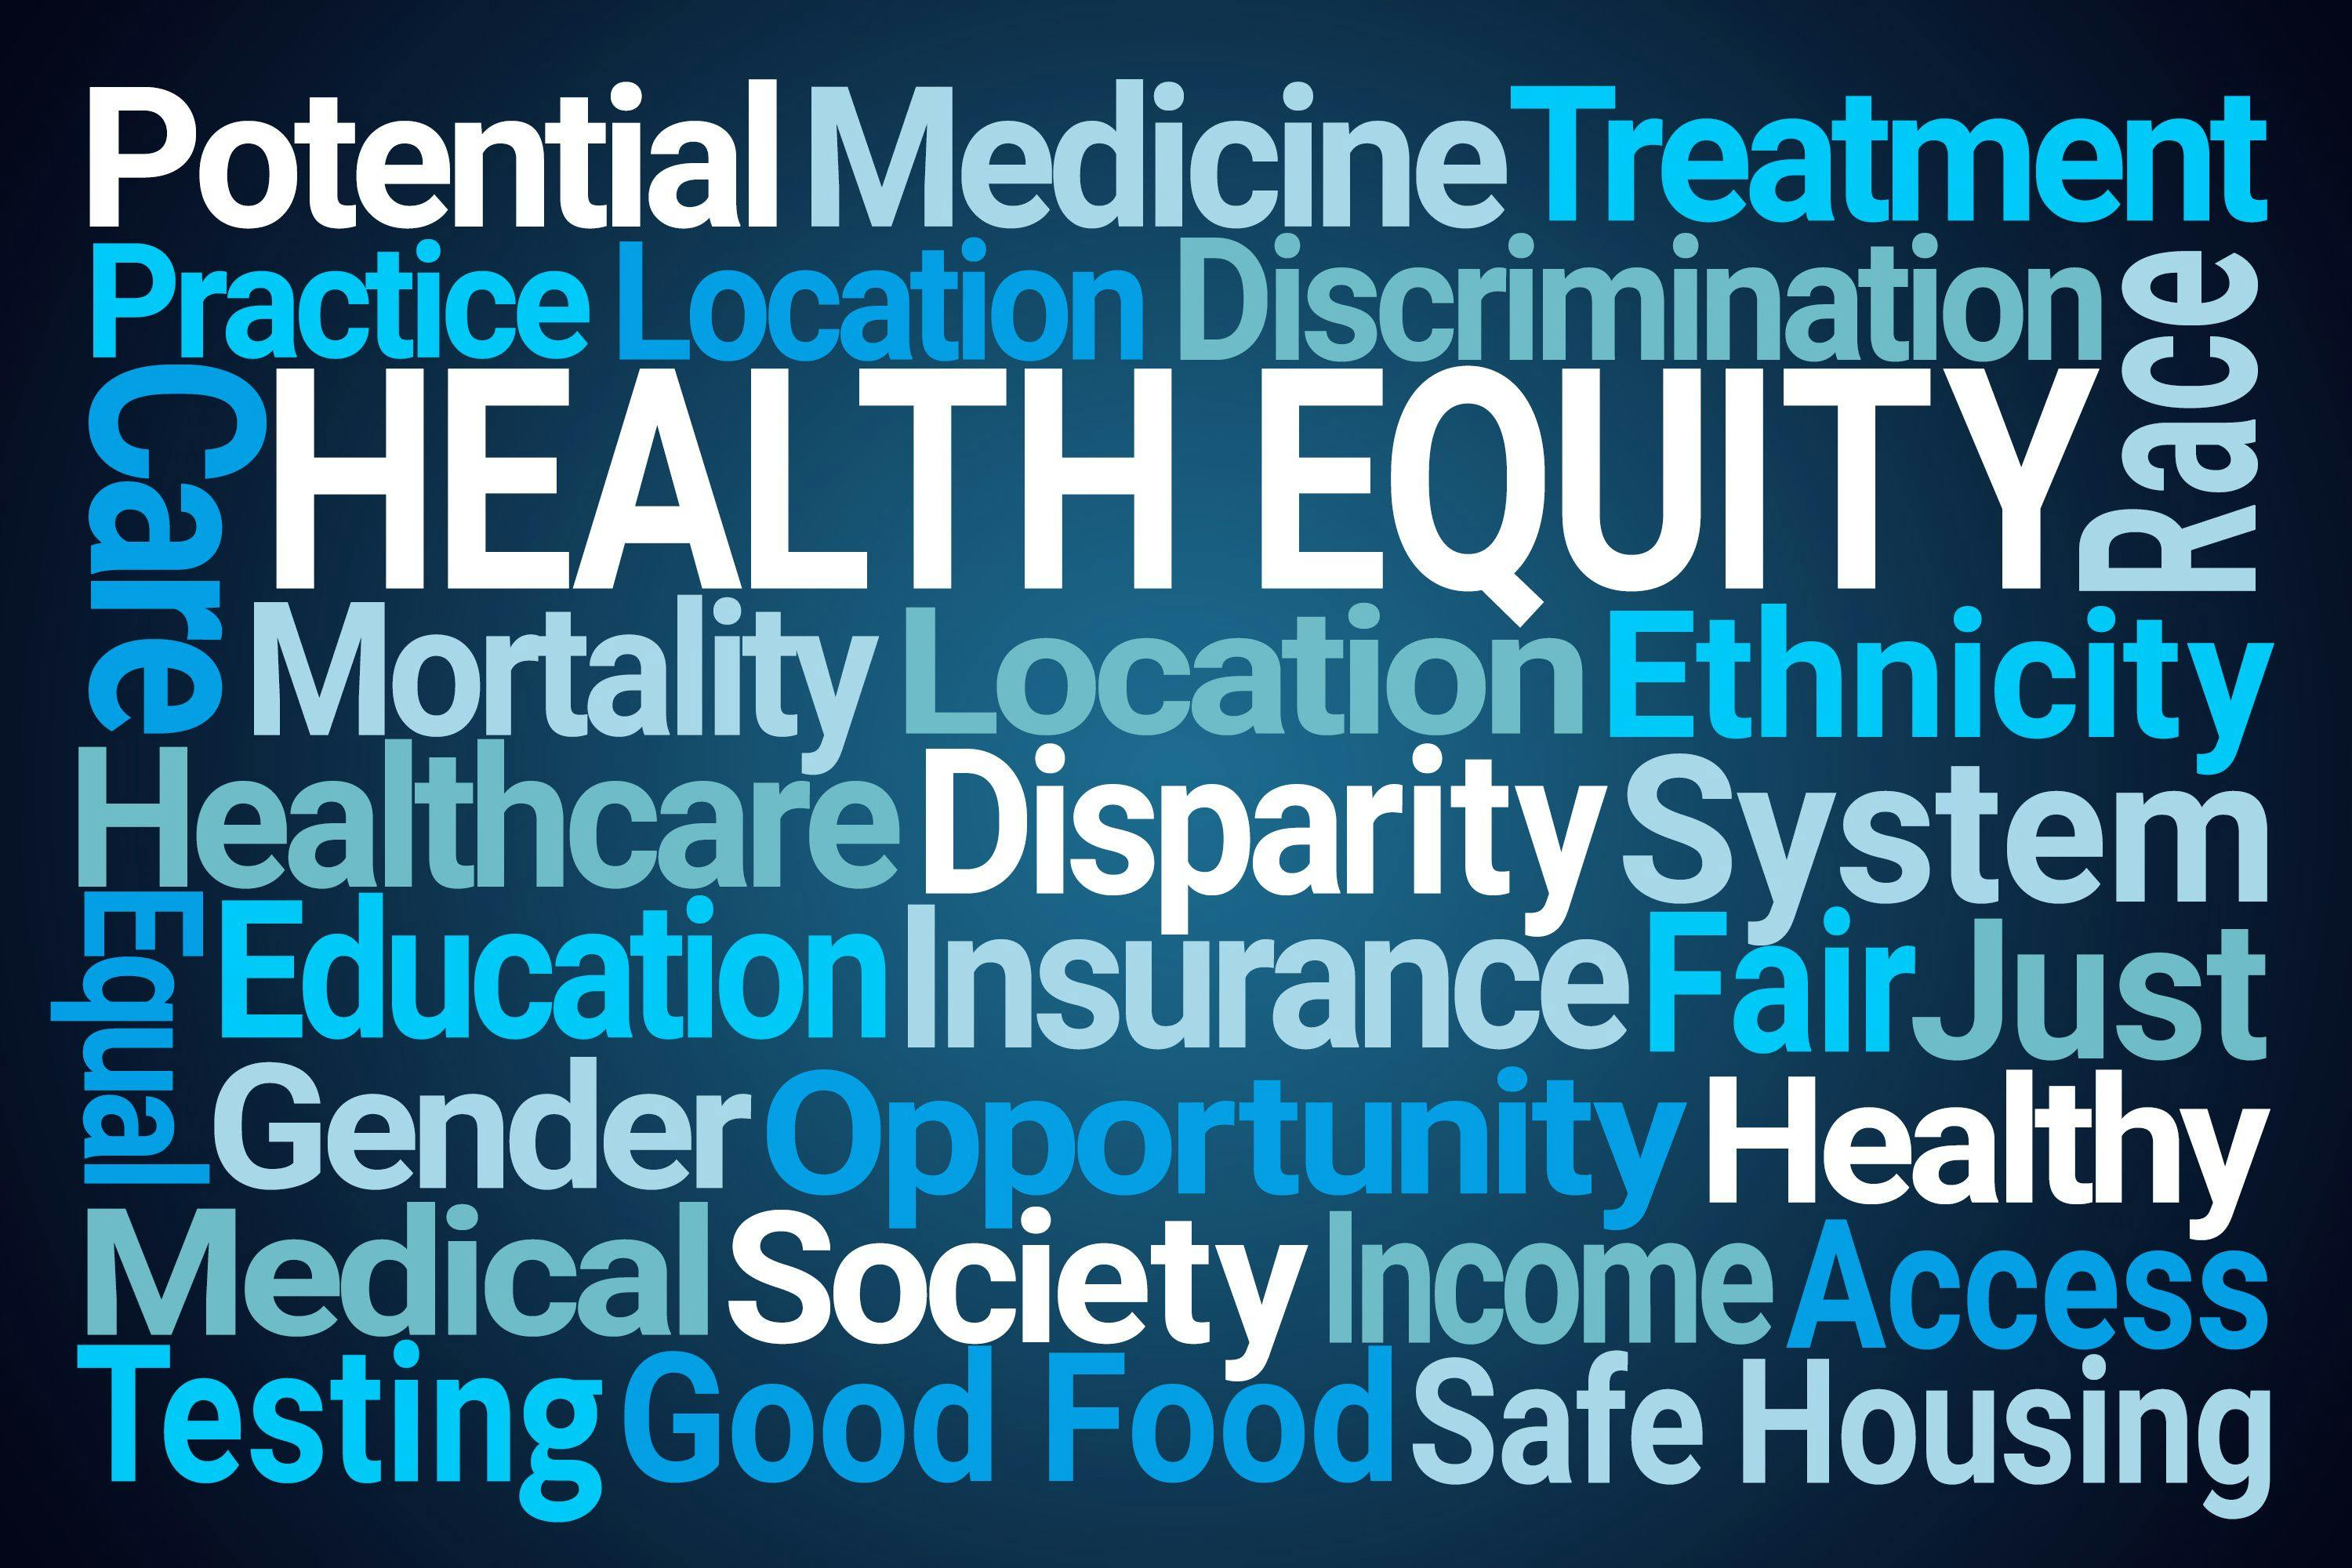 Health equity: ©Robert Wilson - stock.adobe.com